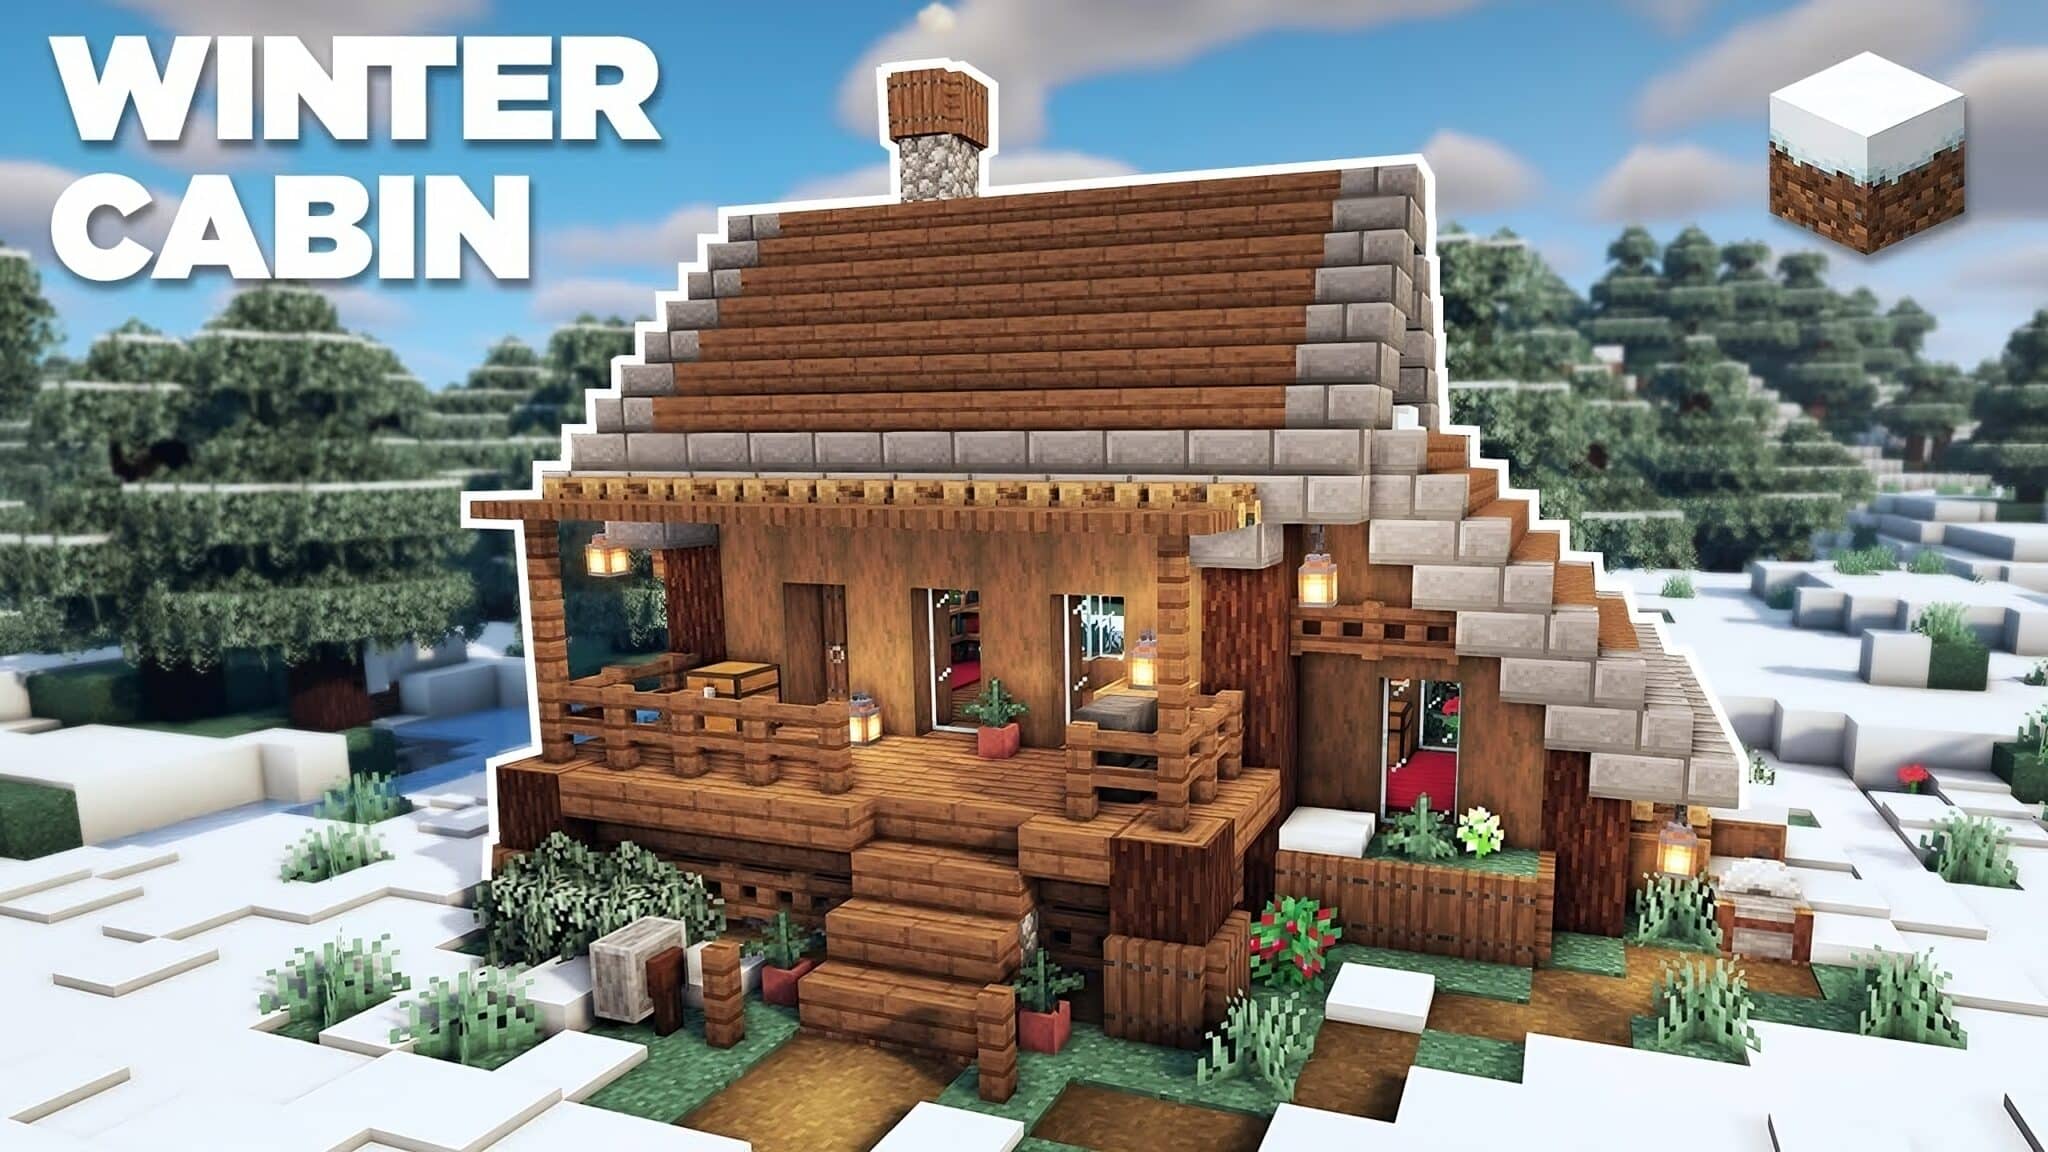 Cozy Winter Cabin Base In Minecraft Transformed 2048x1152 